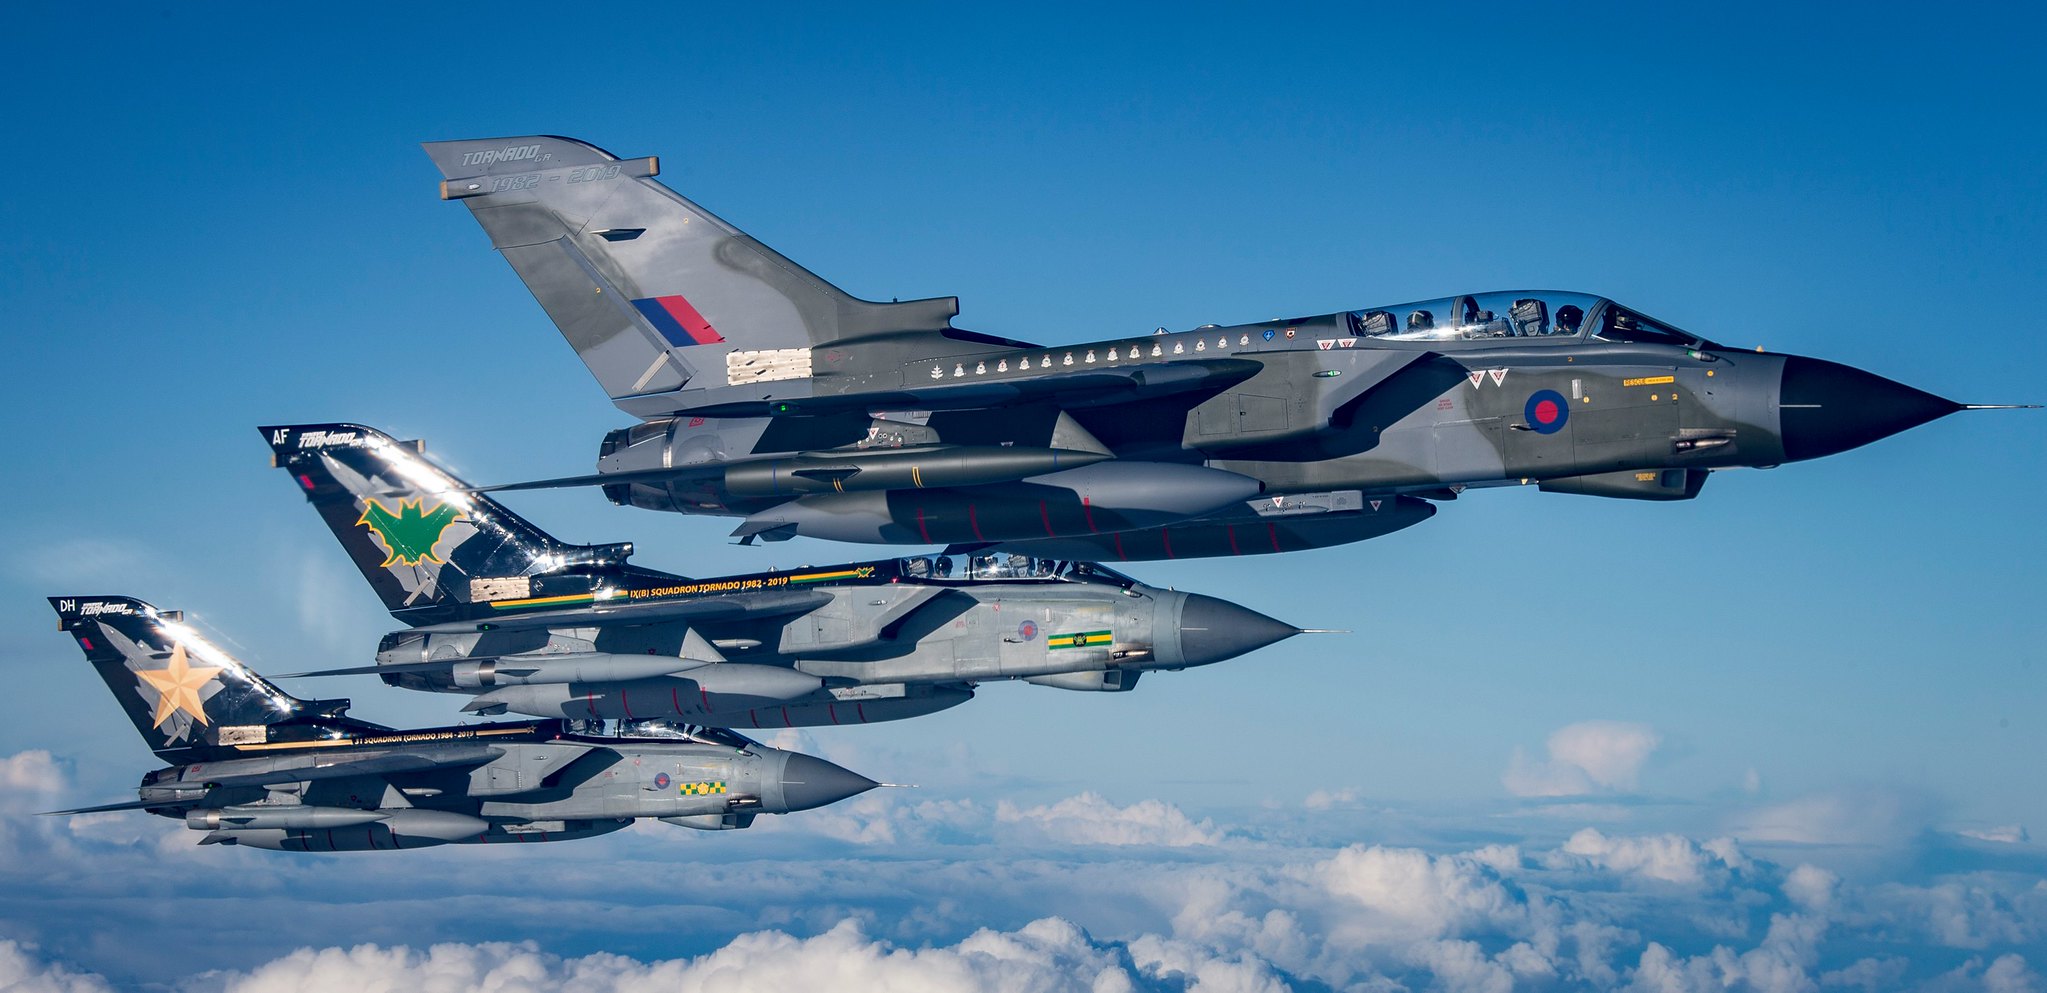 Royal Air Force Tornados